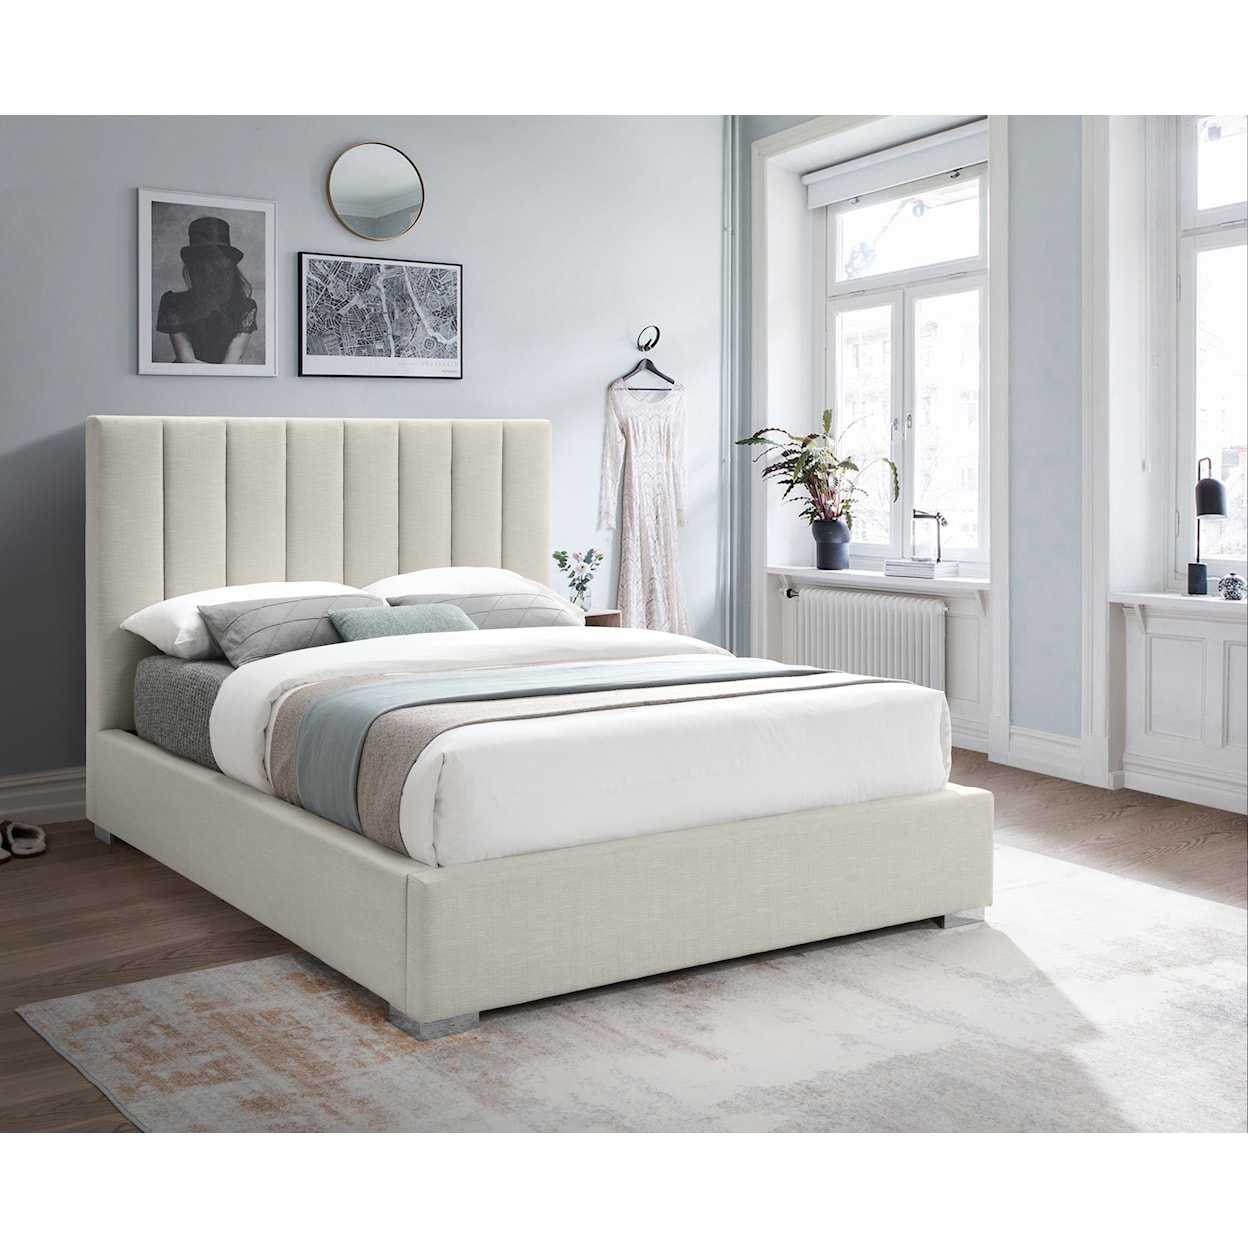 Meridian Furniture Pierce King Bed